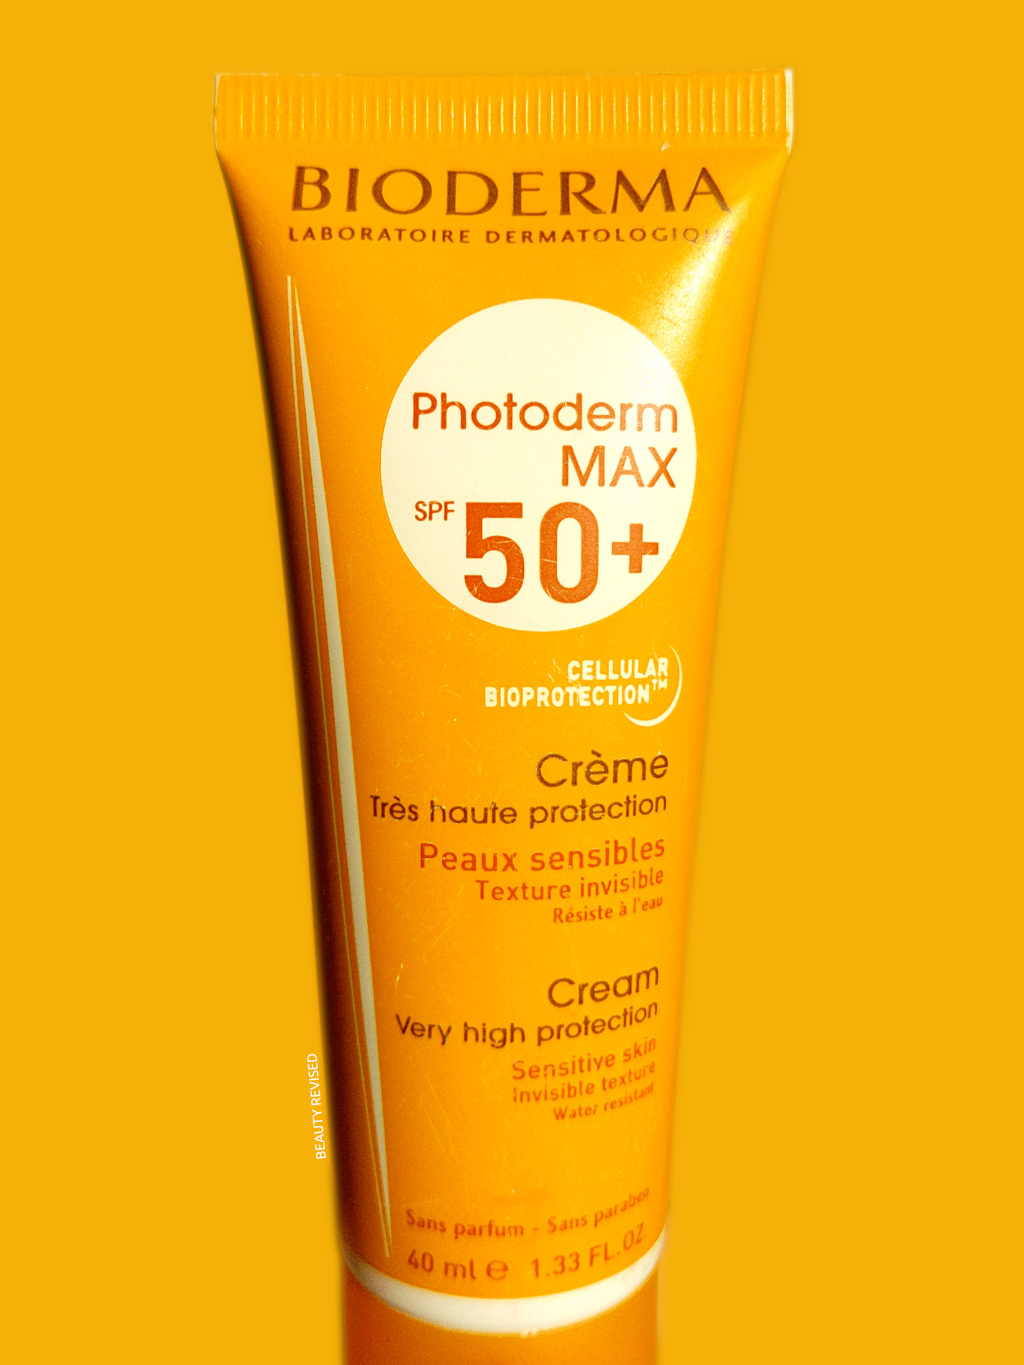 Bioderma Photoderm MAX Crème SPF 50+ front